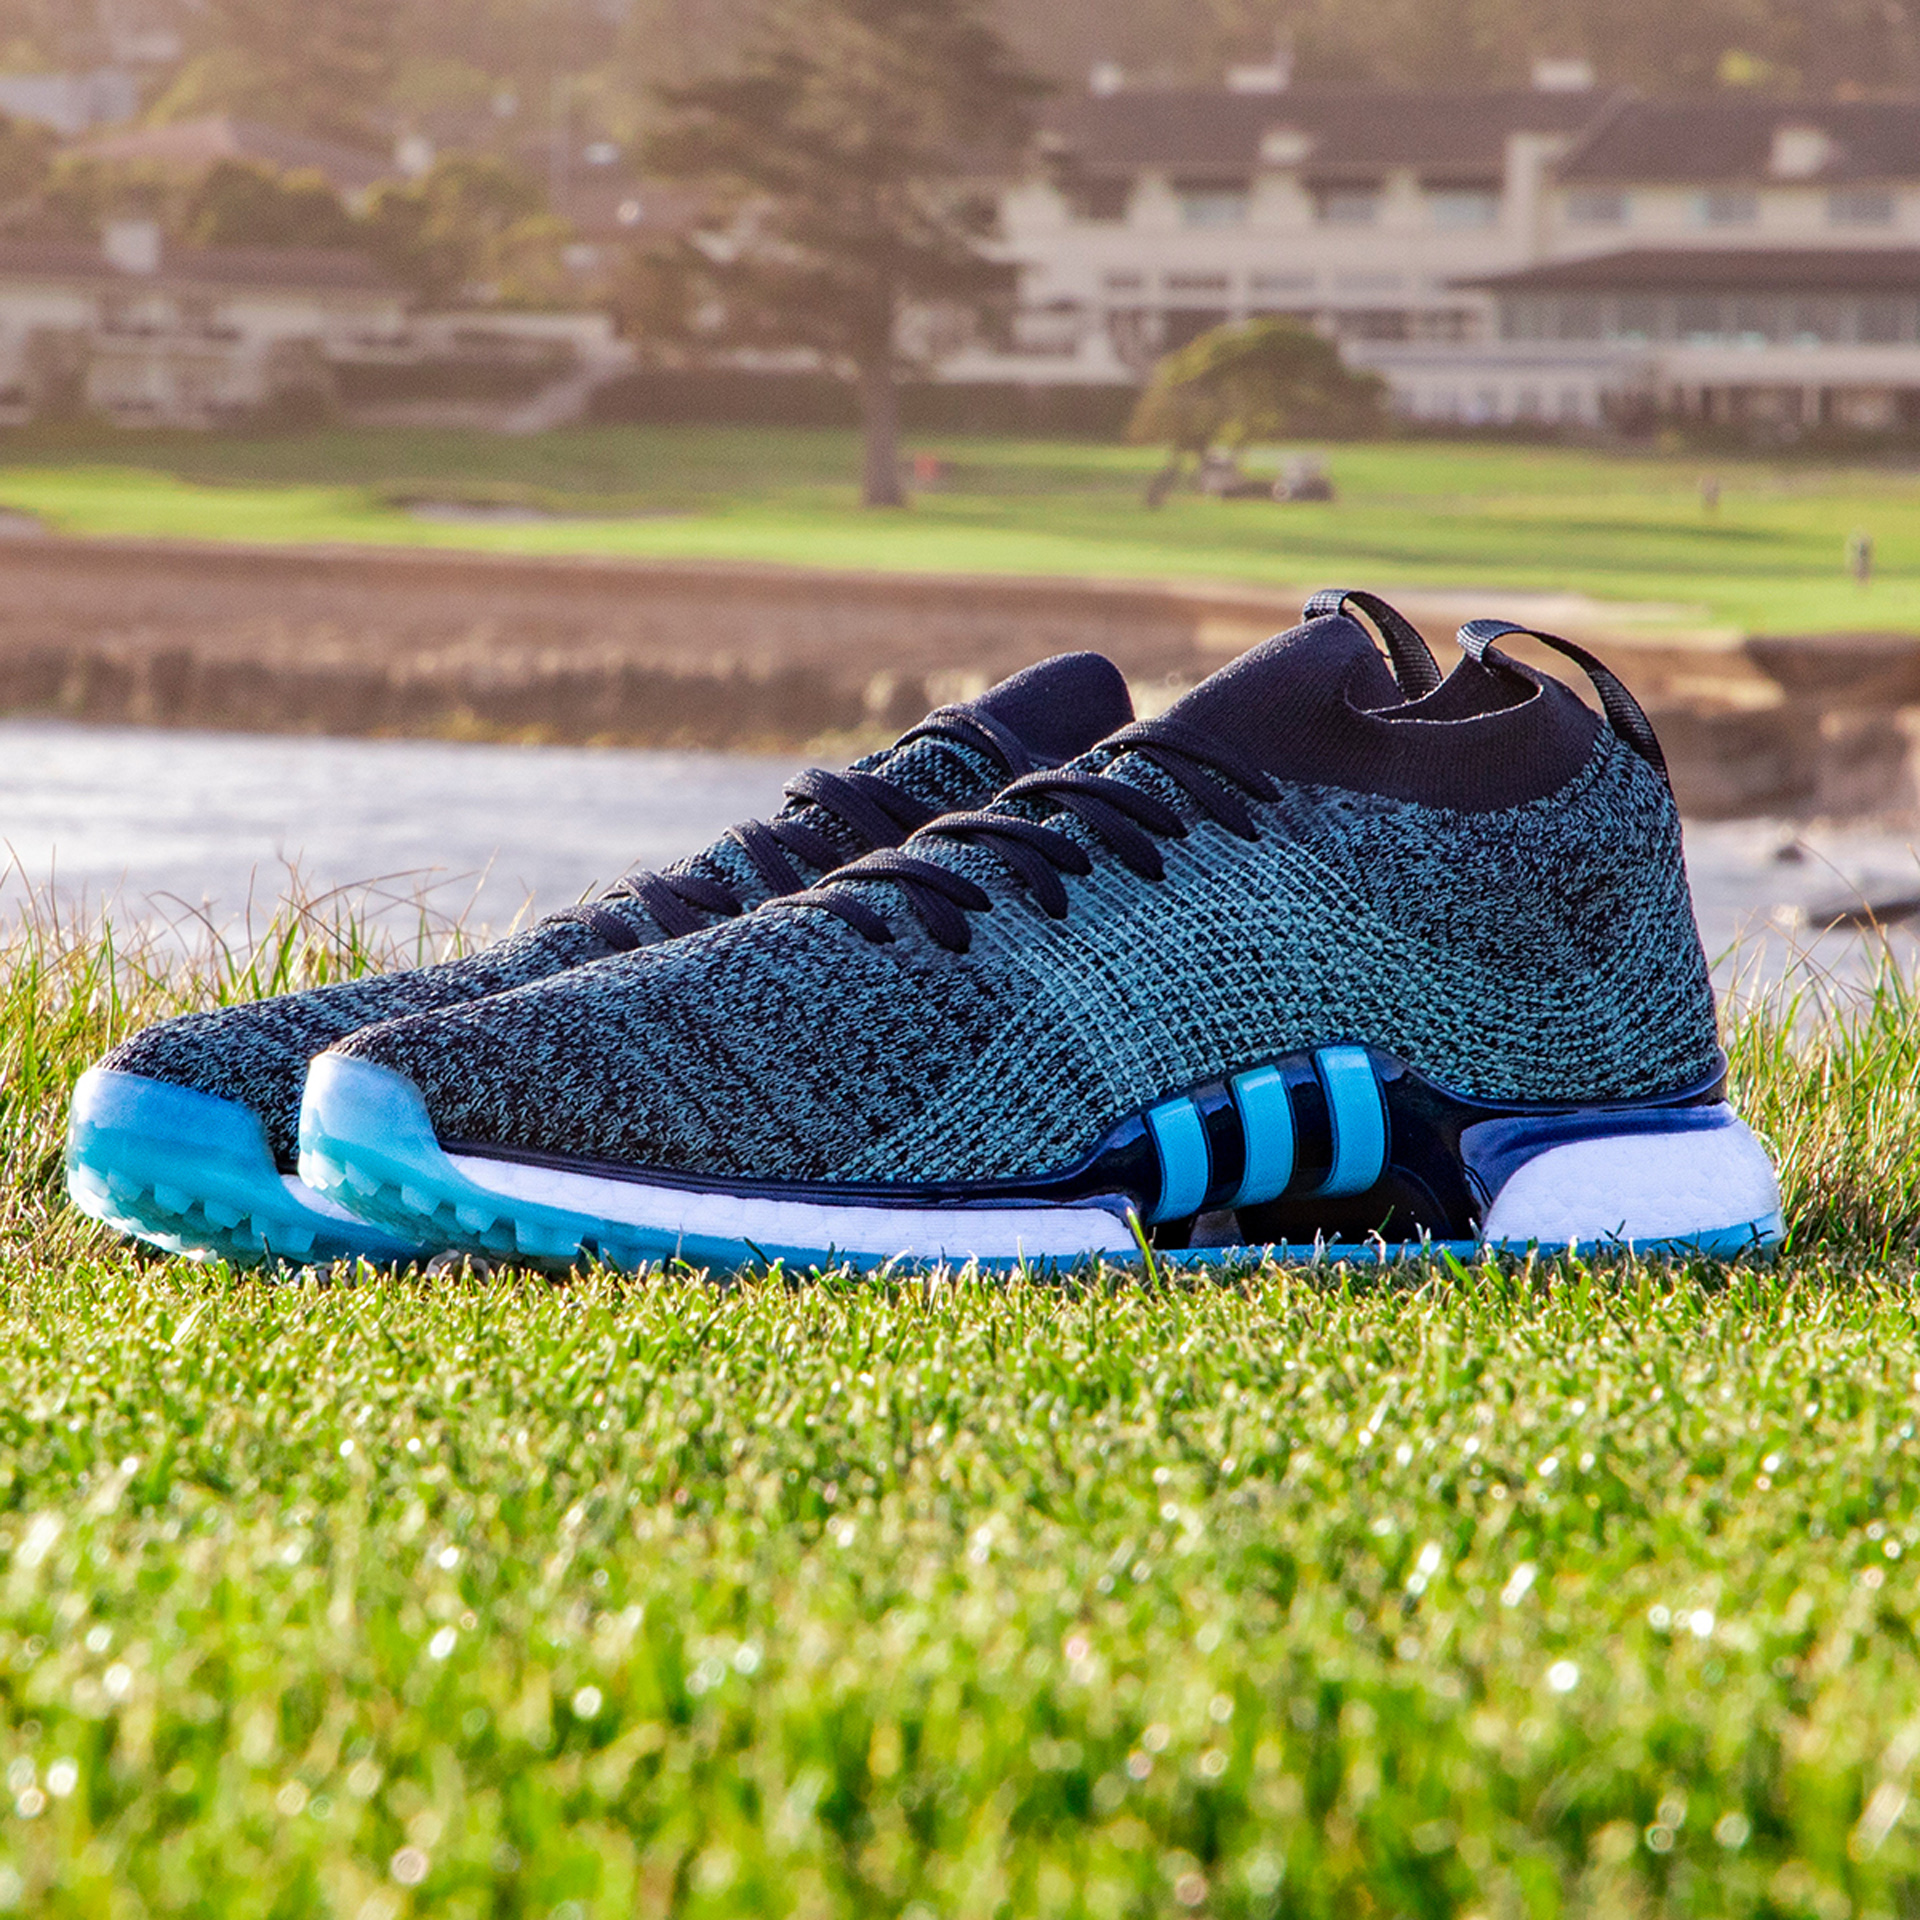 adidas adizero golf shoes banned